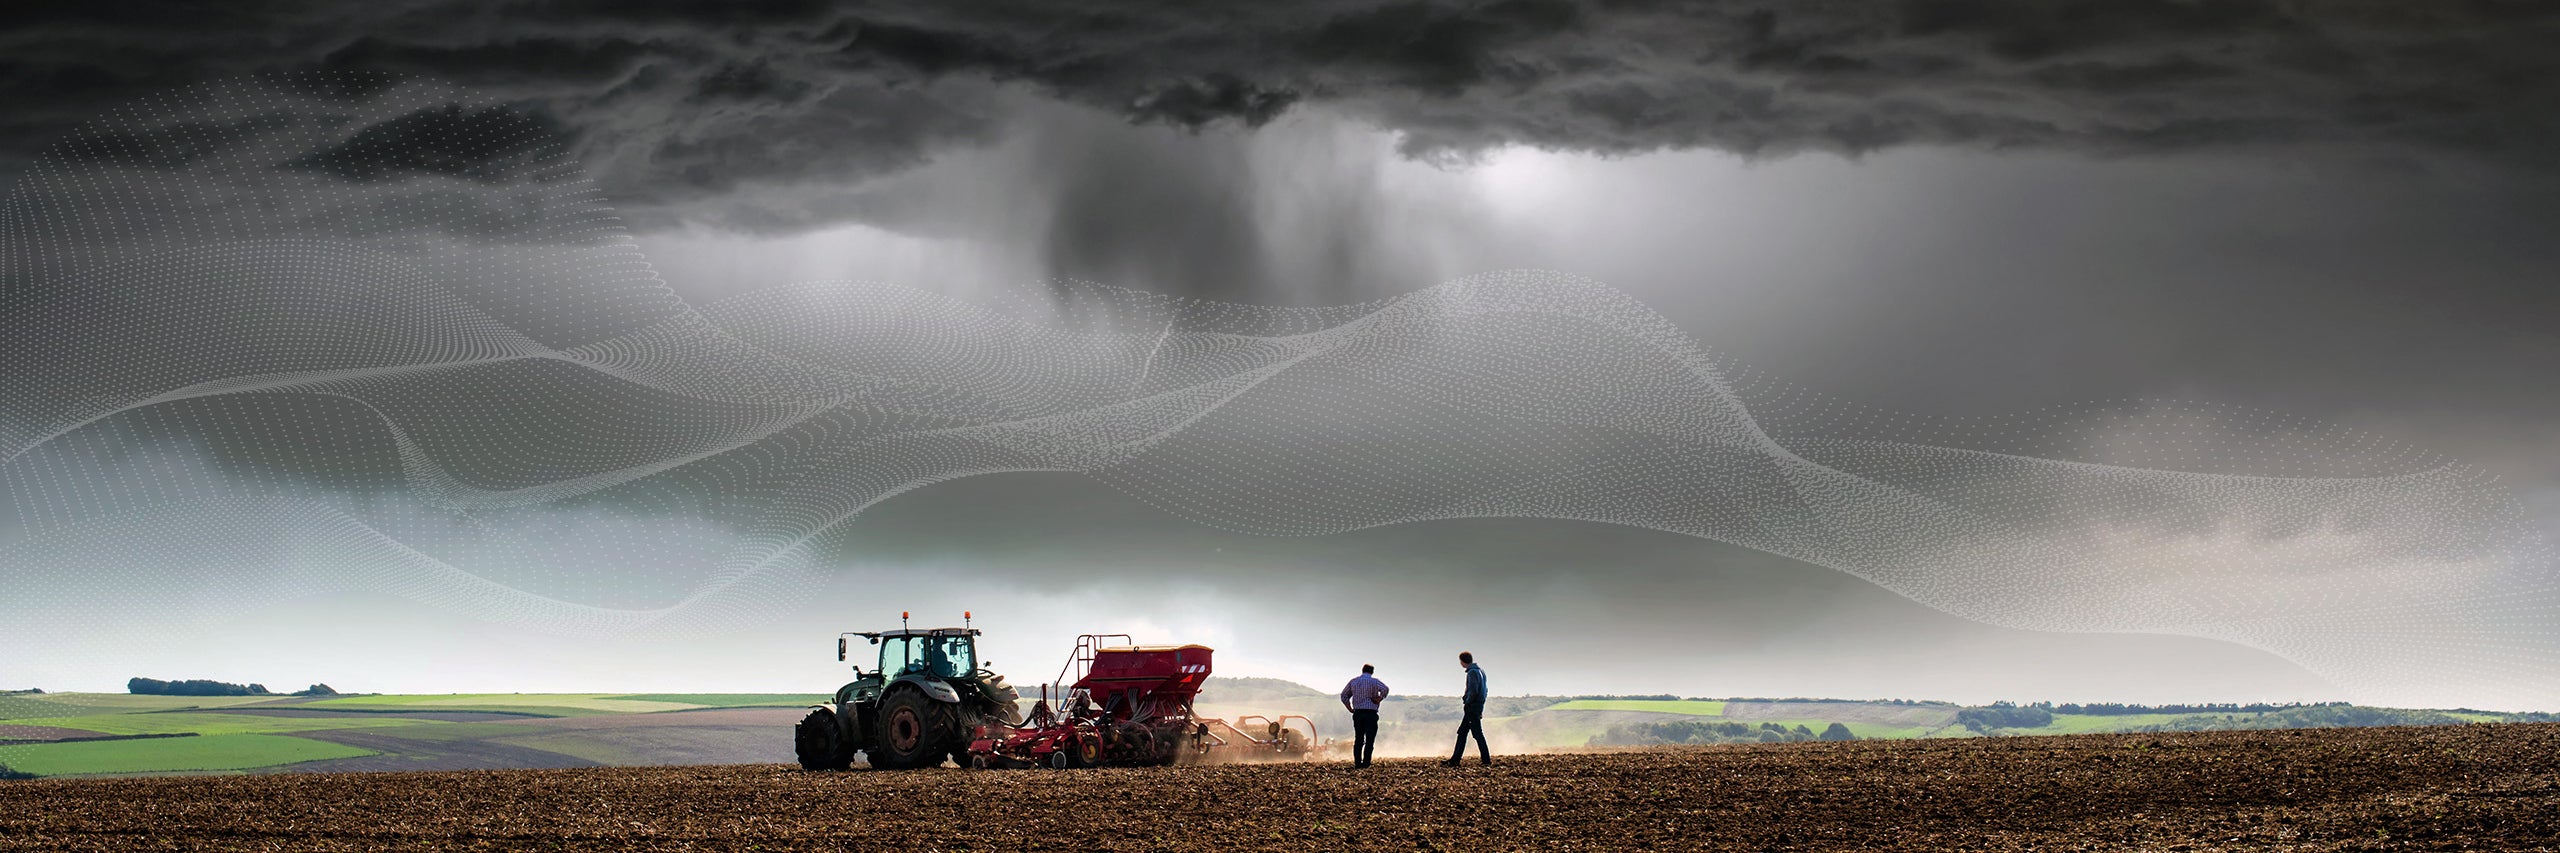 Tractor in farm field under stormy sky